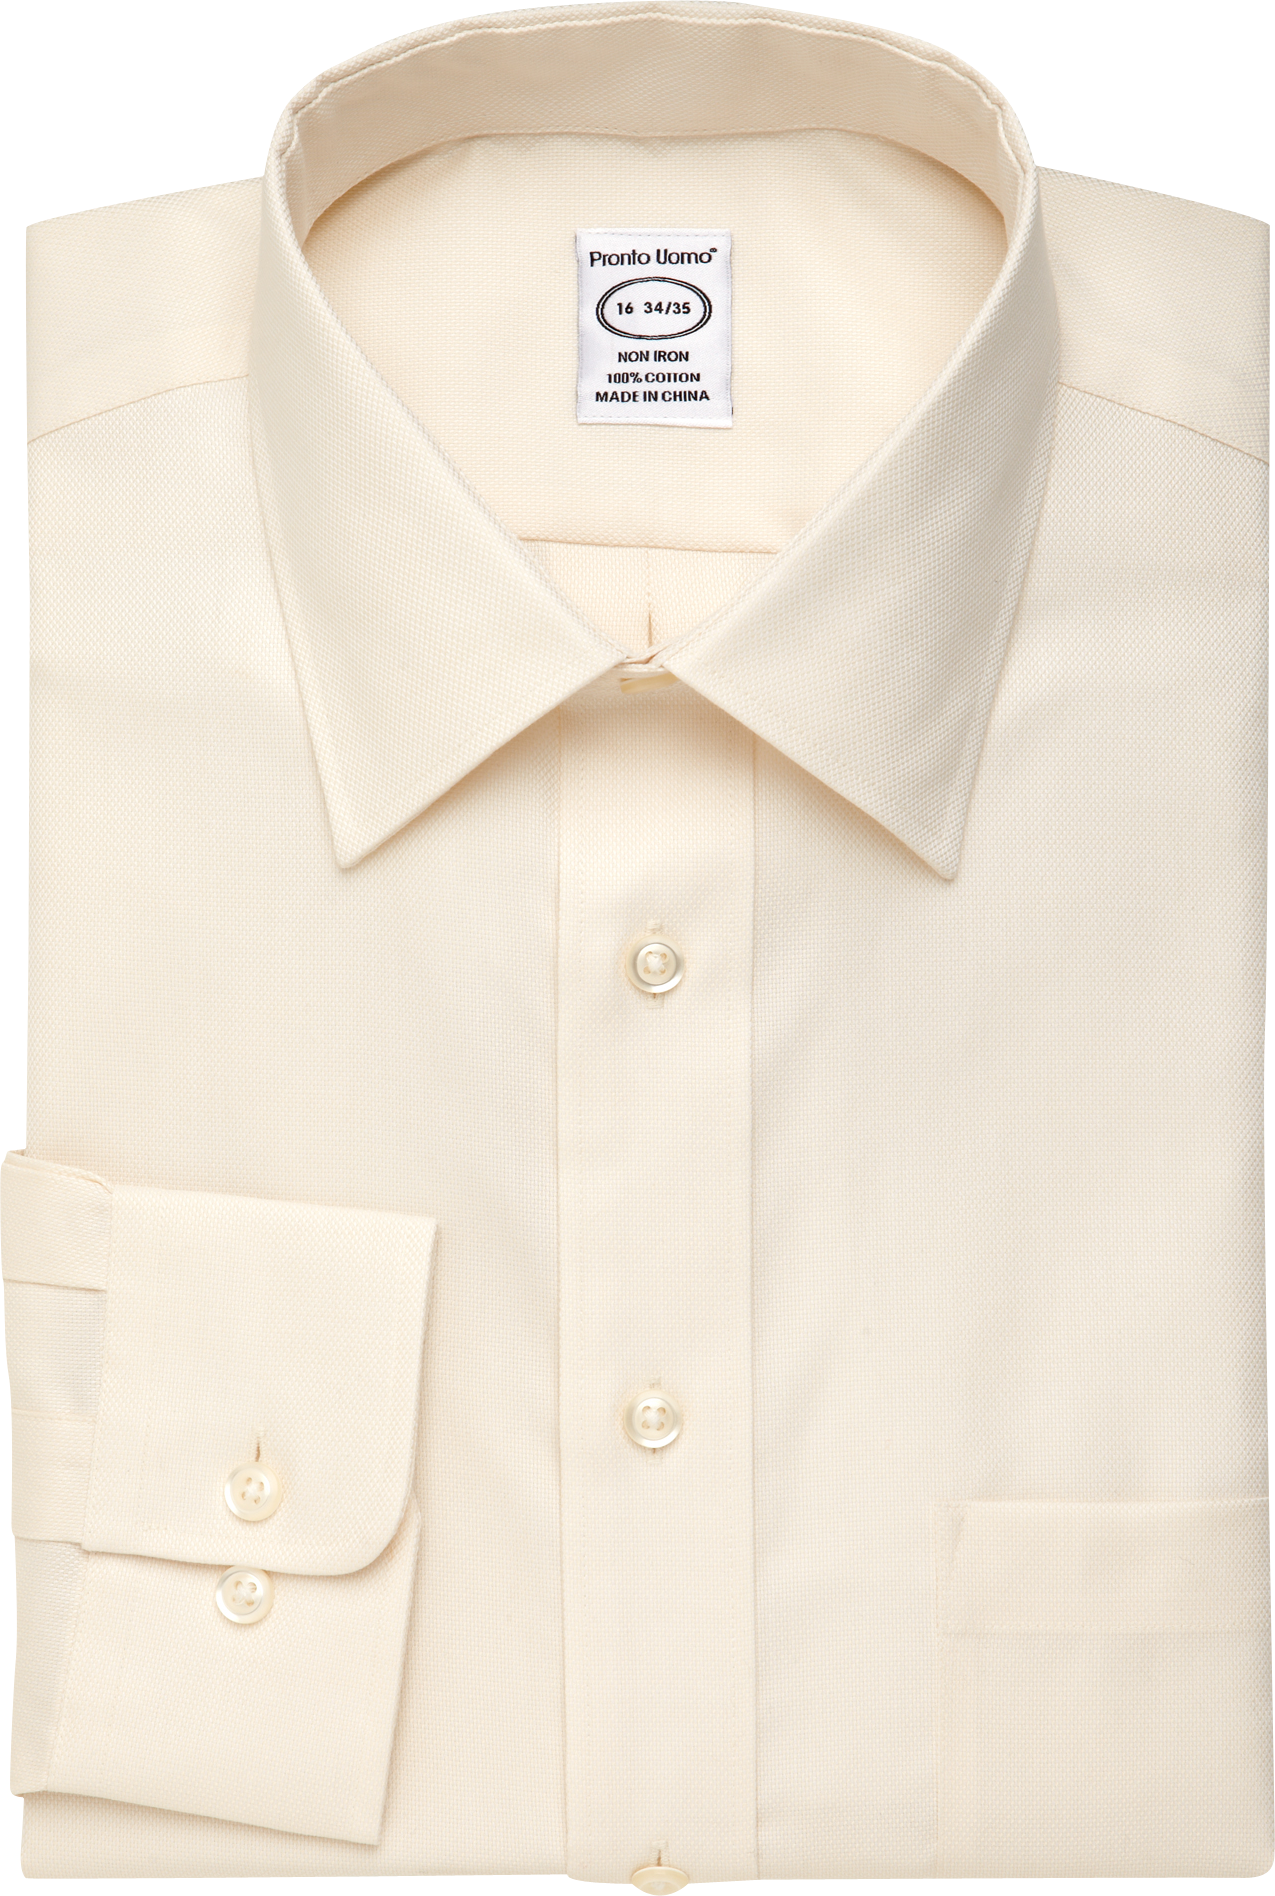 Ivory Dress Shirt | Men's Wearhouse